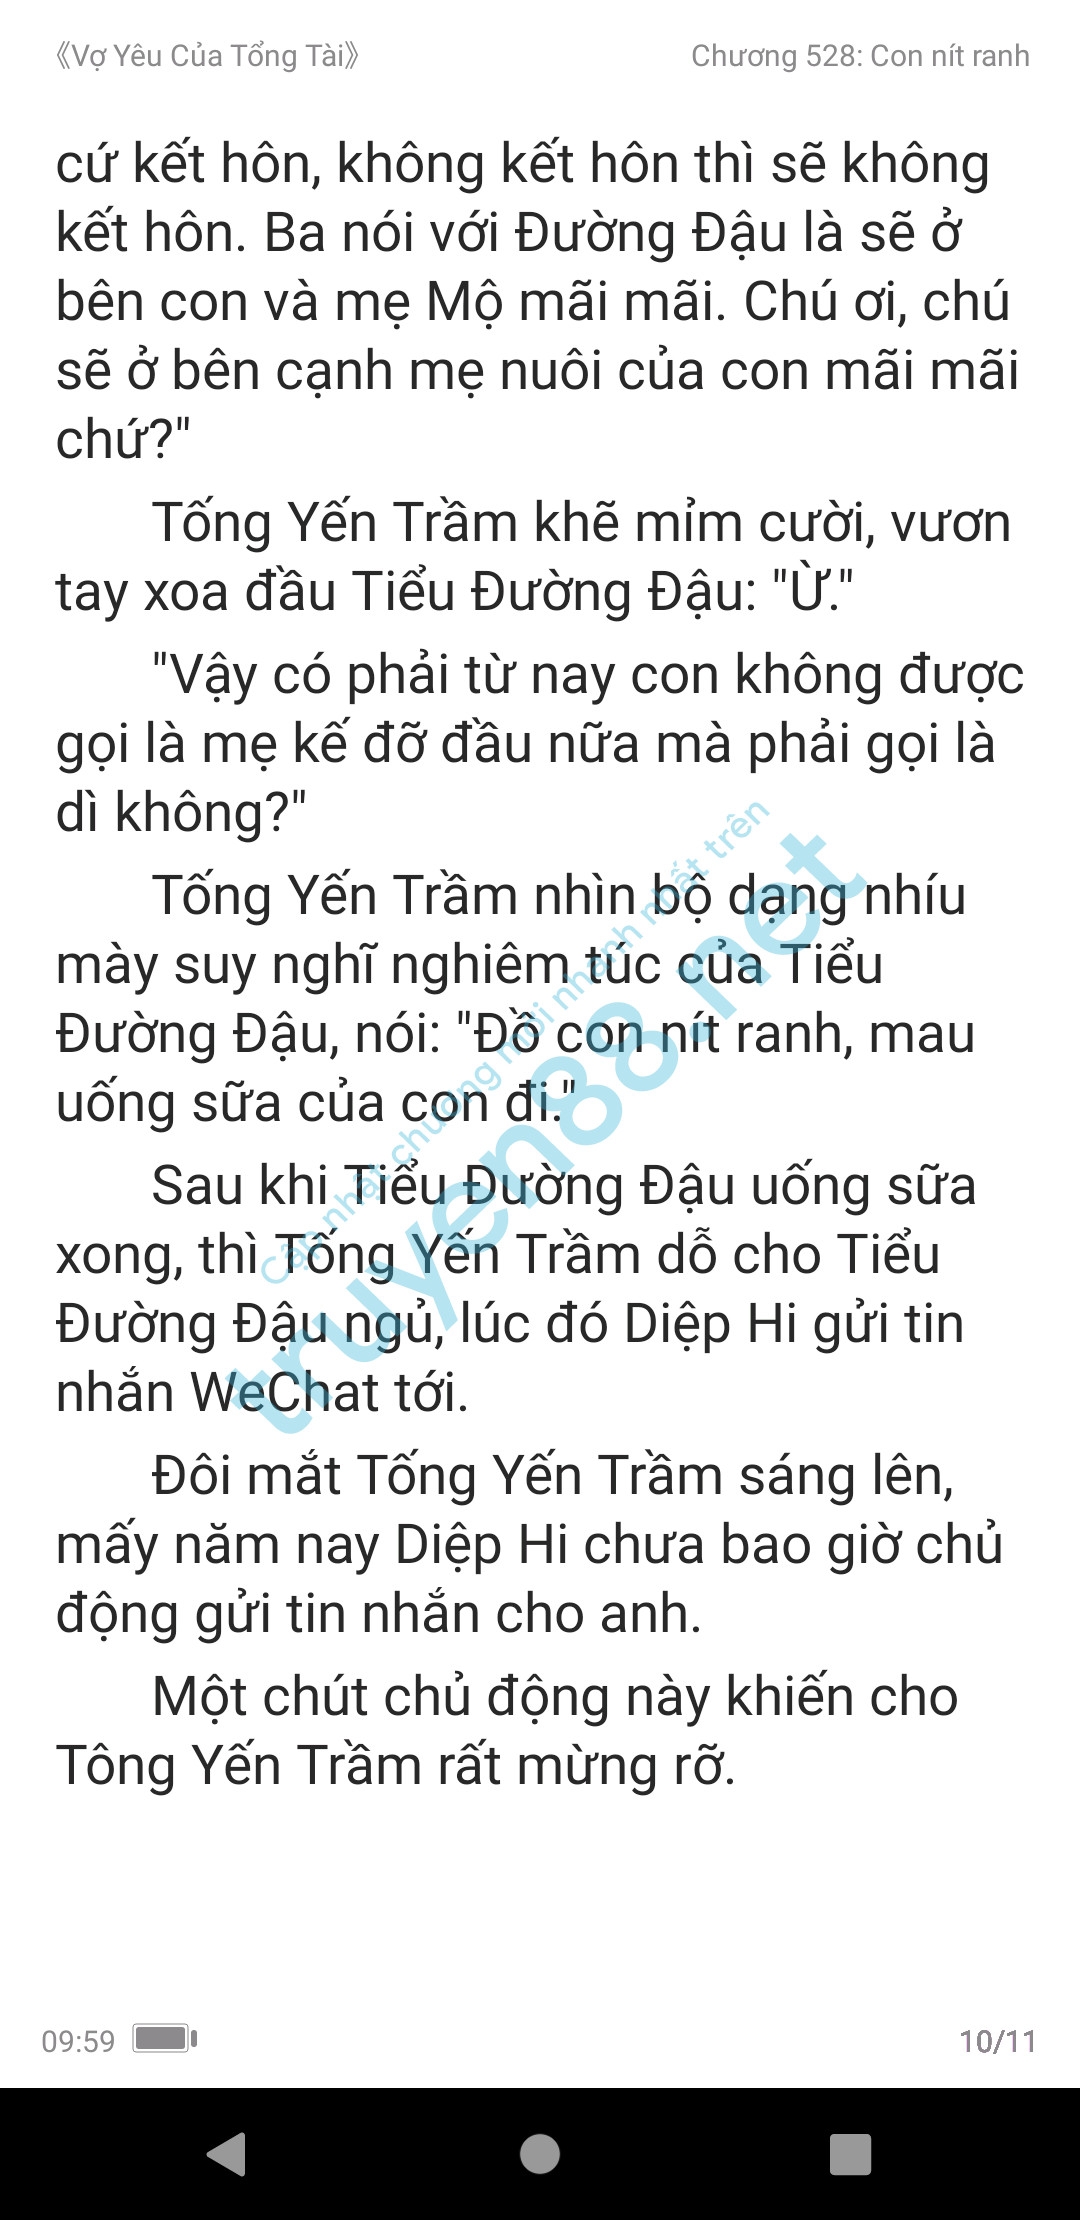 vo-yeu-cua-tong-tai-mo-vi-lan--pho-han-tranh-538-1